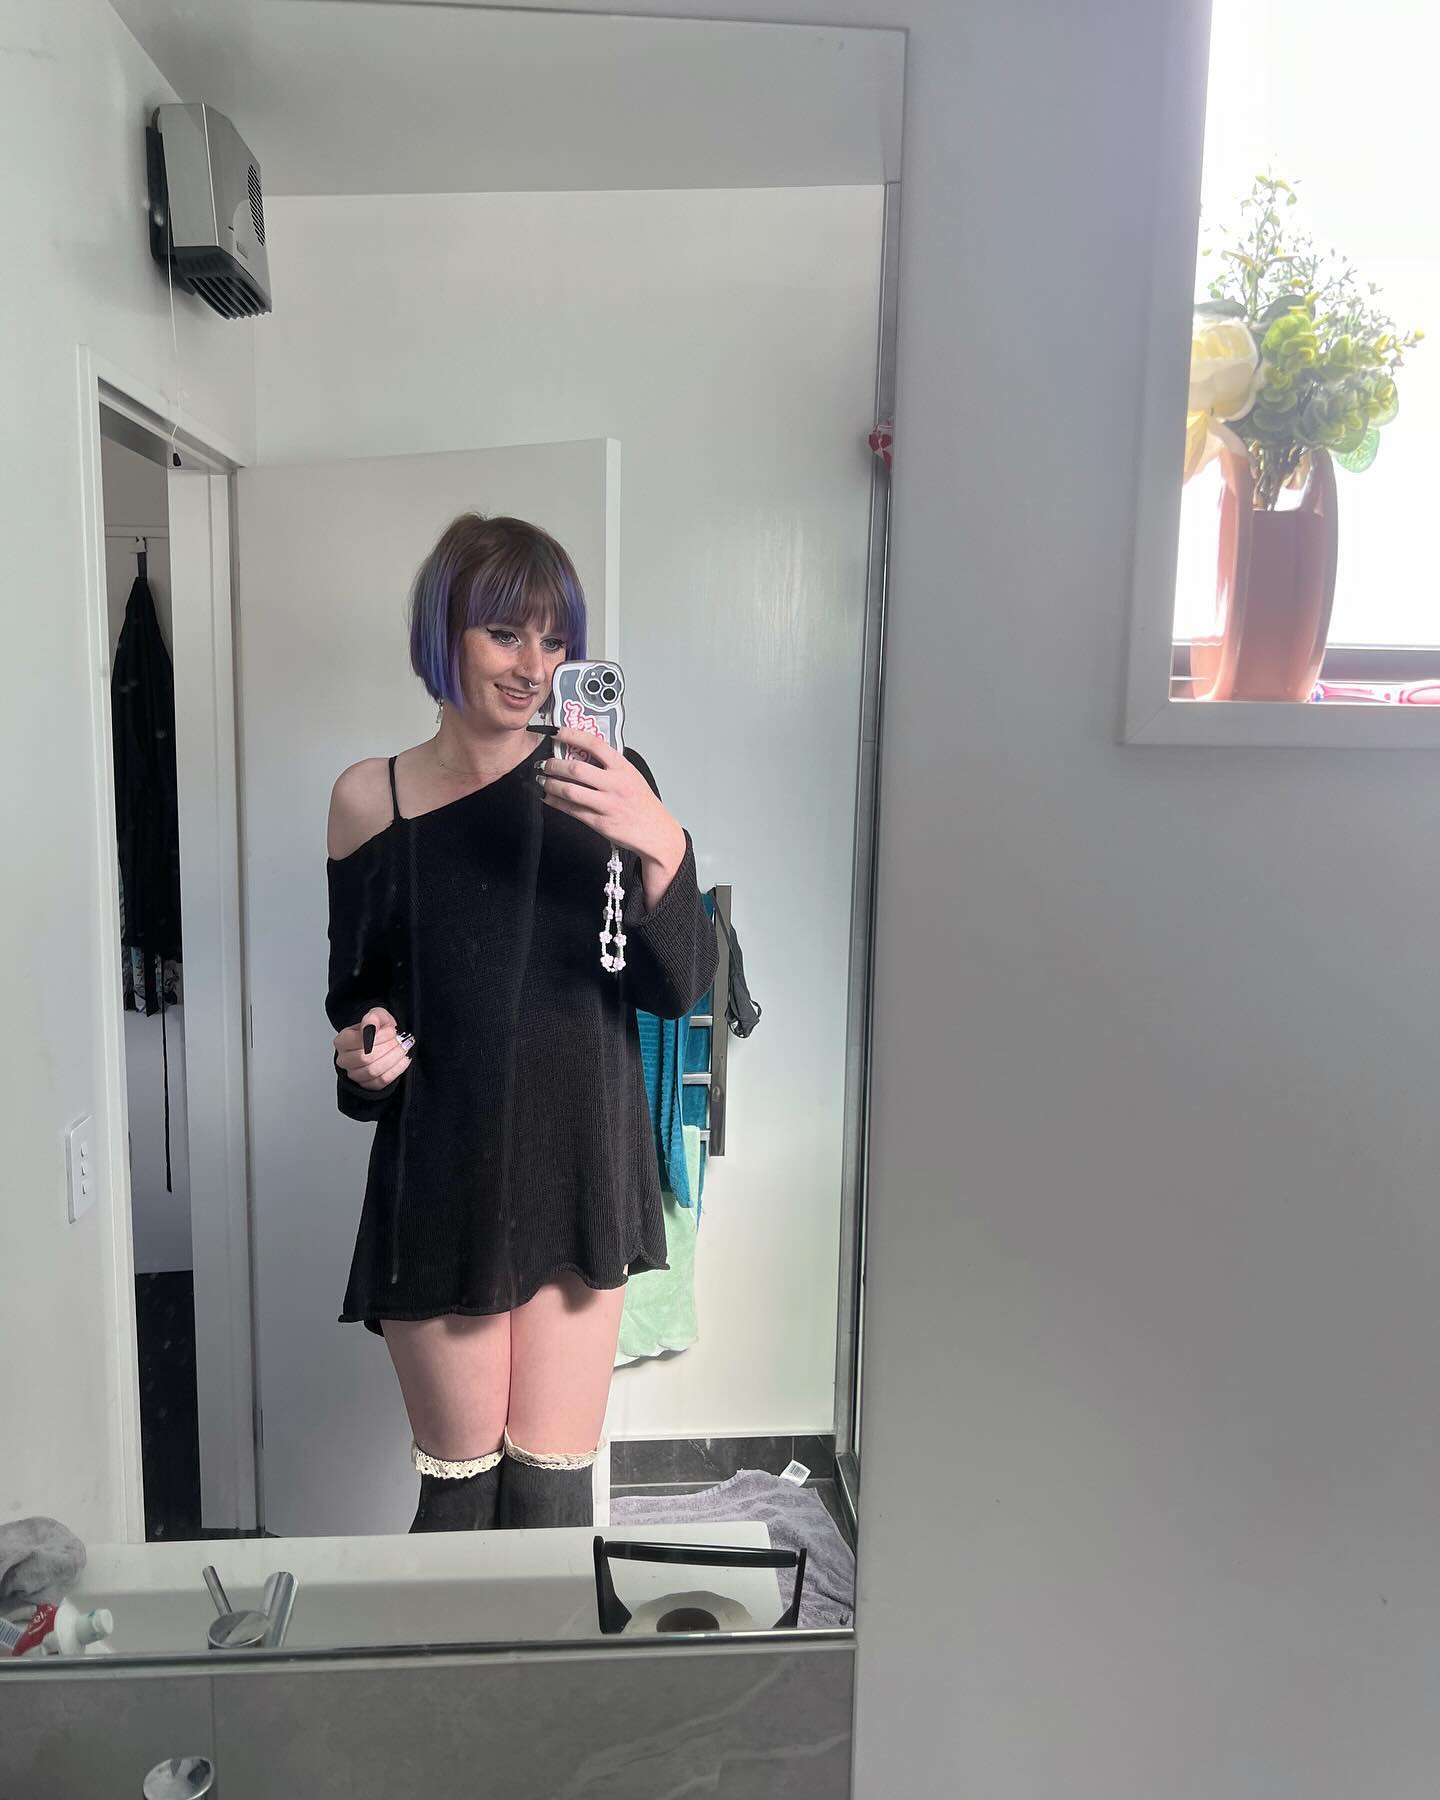 Why do bathroom selfies always make me feel so cute